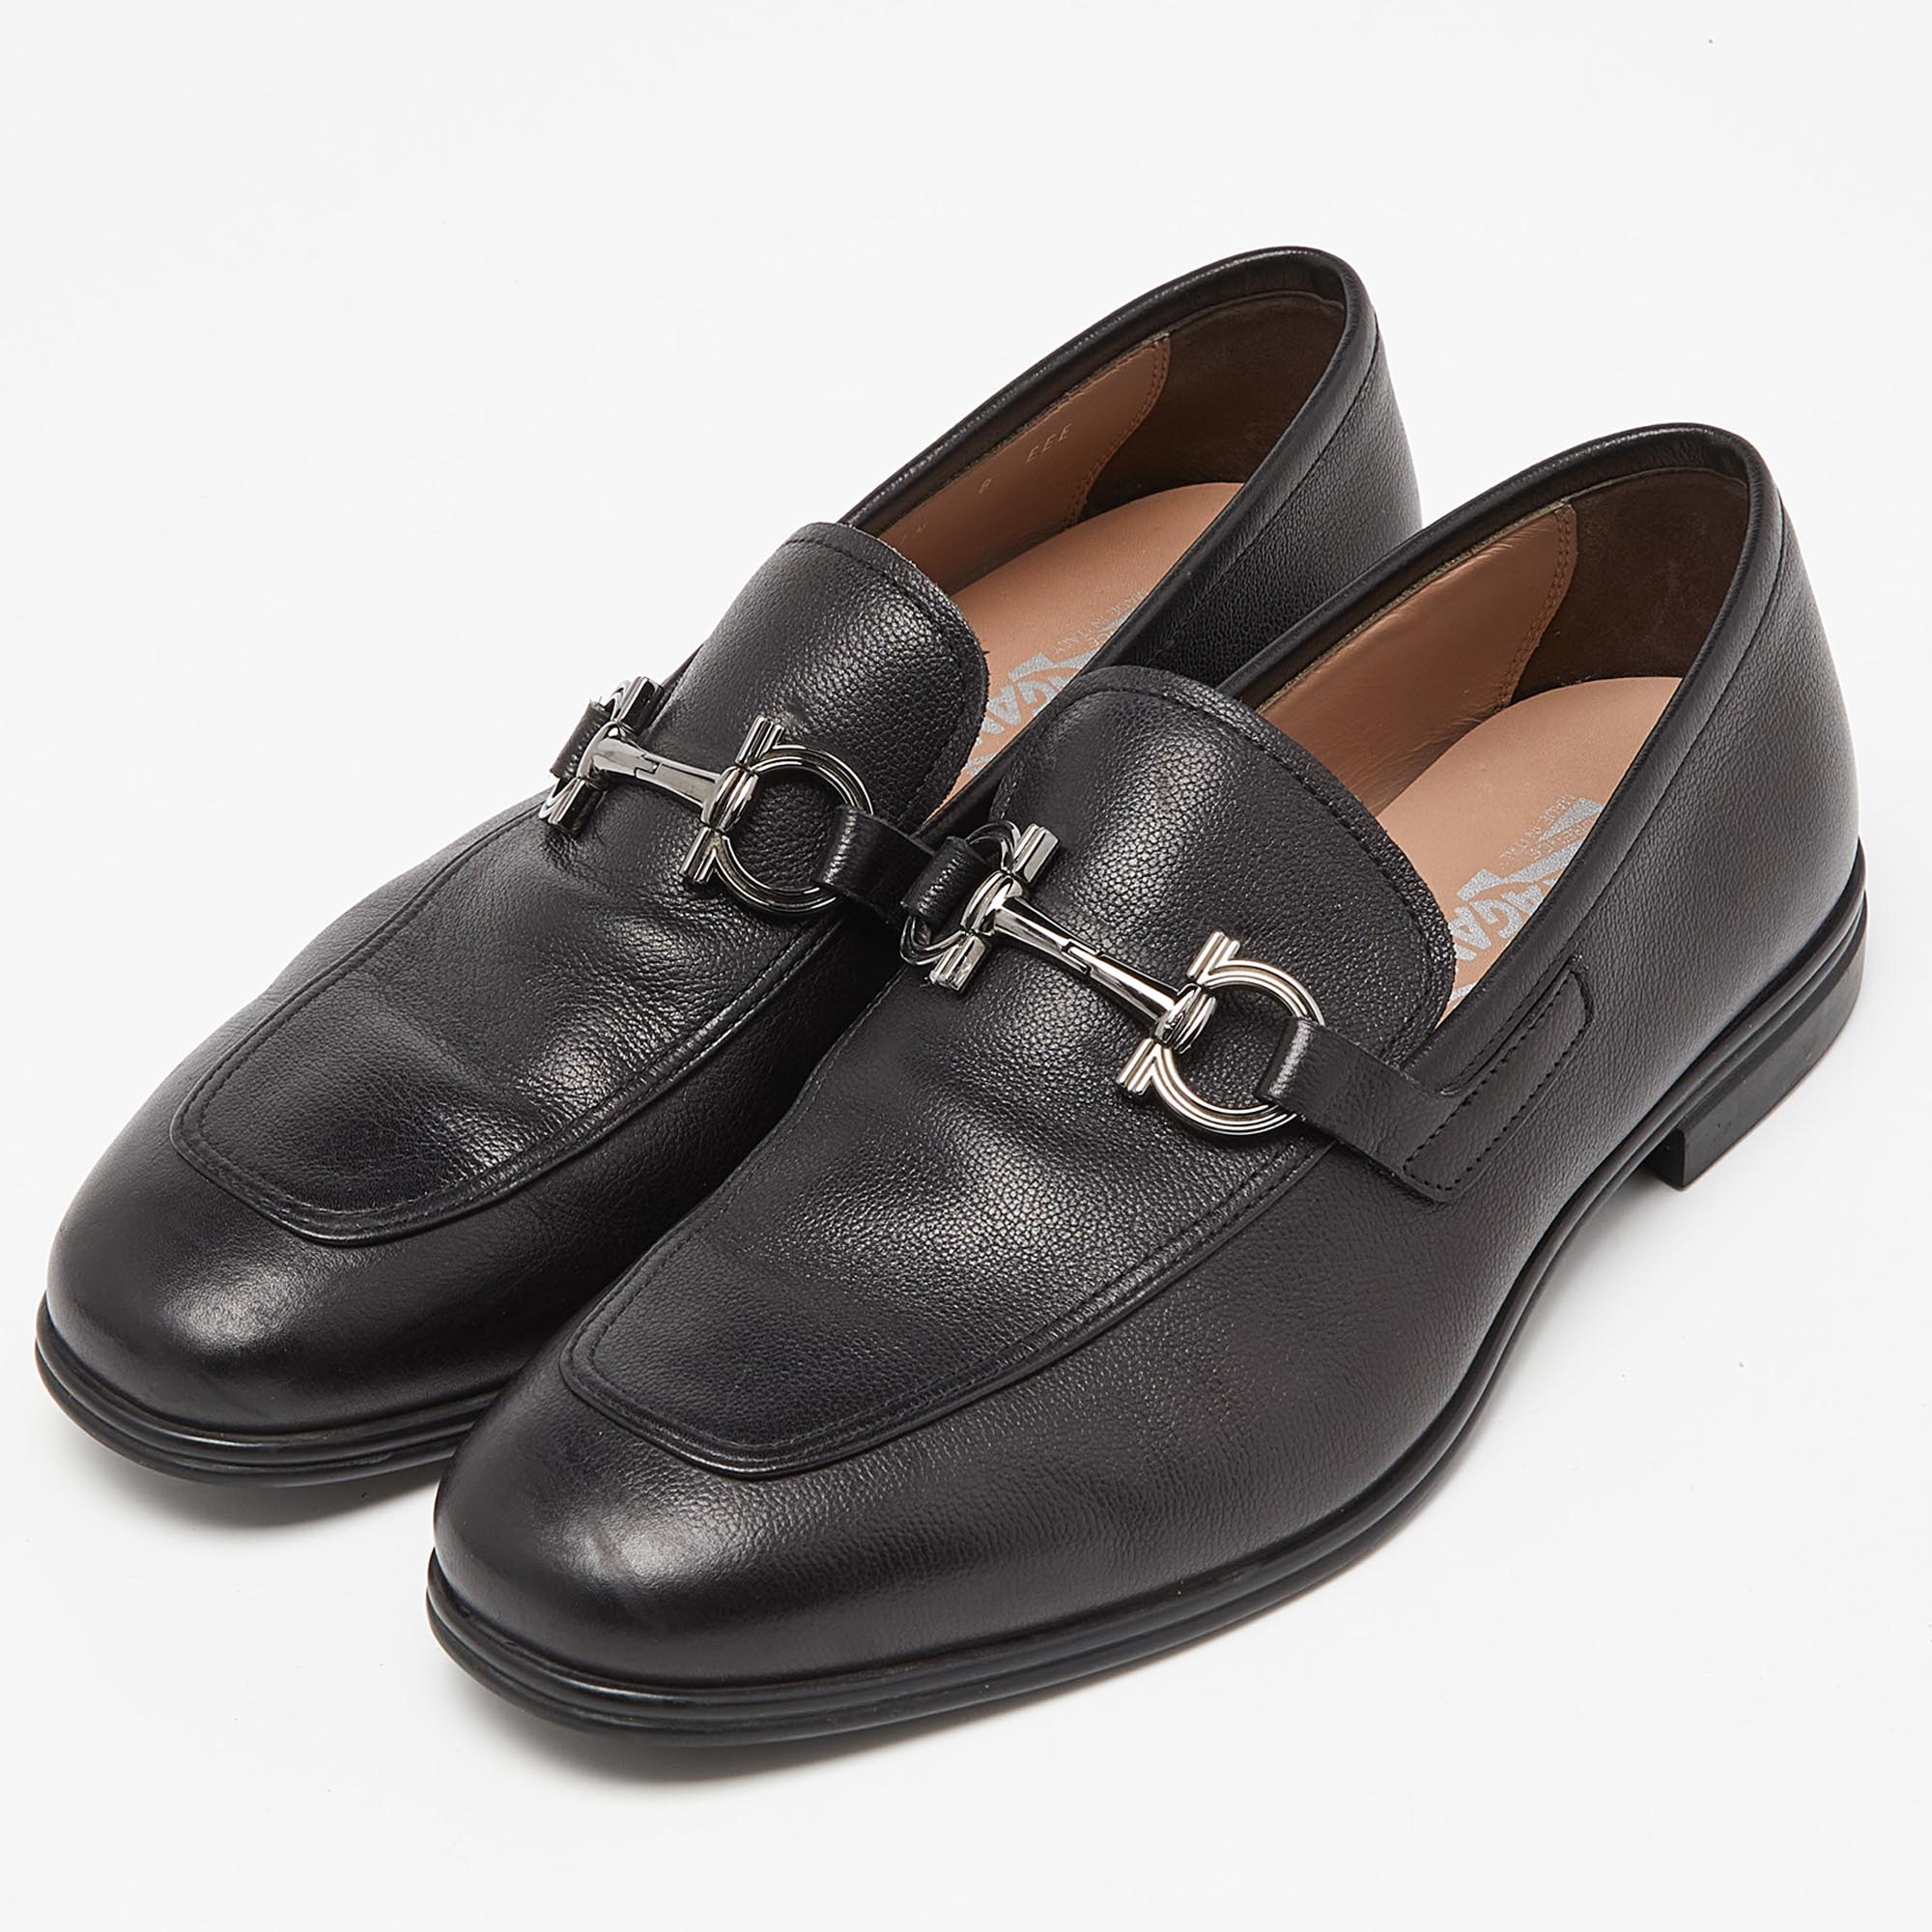 

Salvatore Ferragamo Black Leather Horsebit Slip On Loafers Size